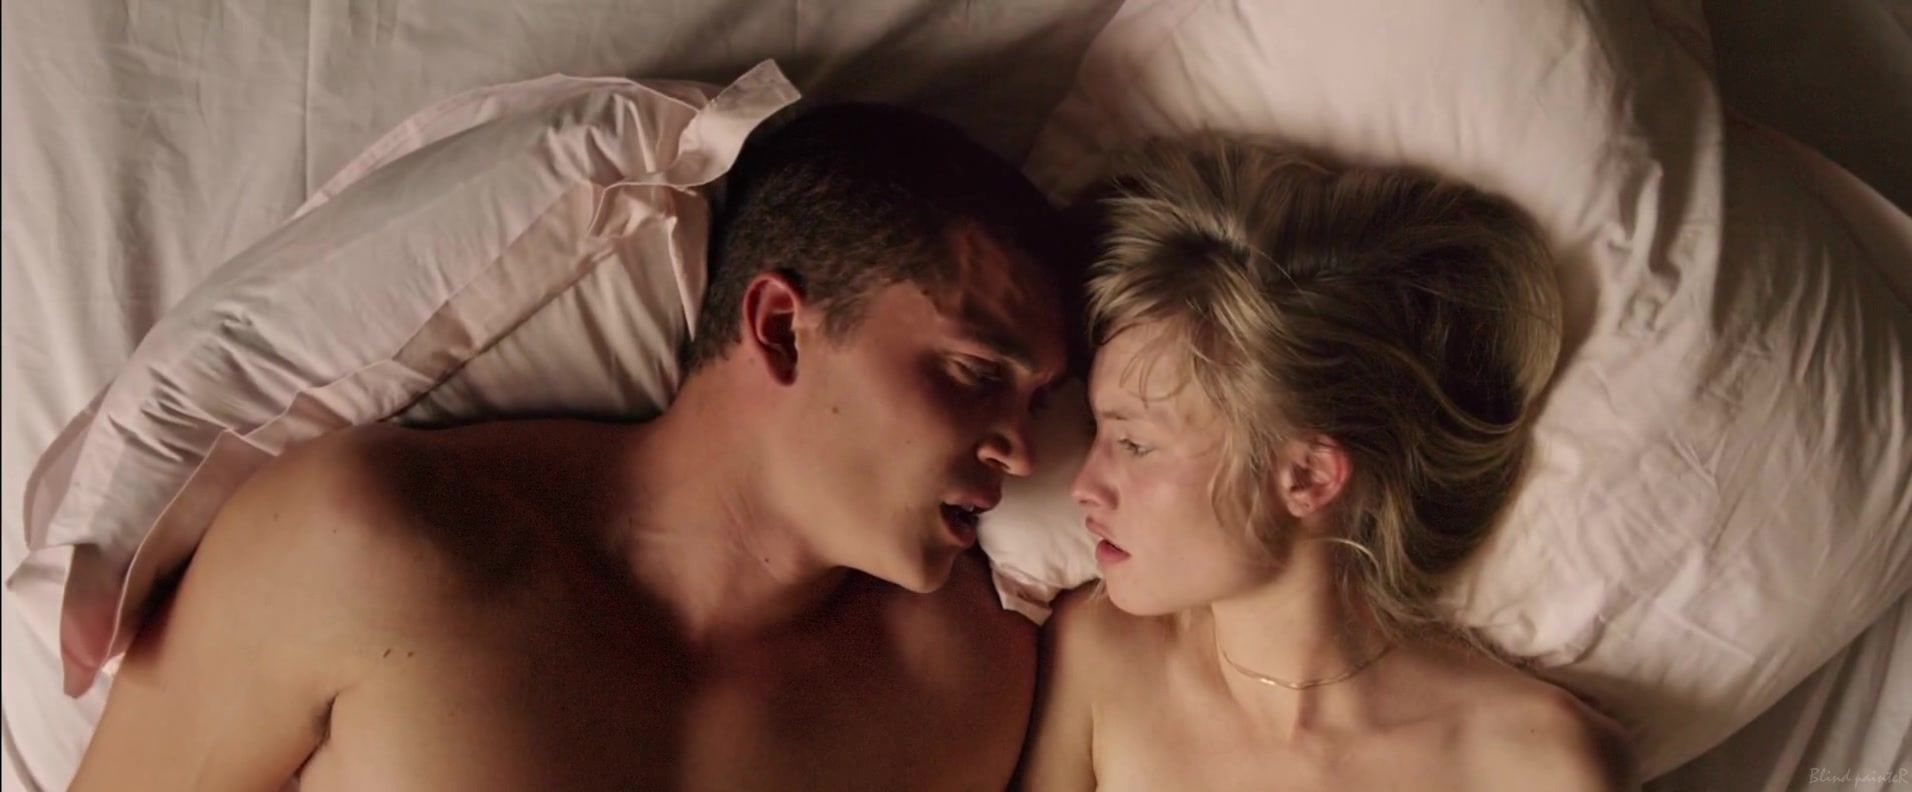 Full Movie Klara Kristin nude - Love (2015) Hottie - 2